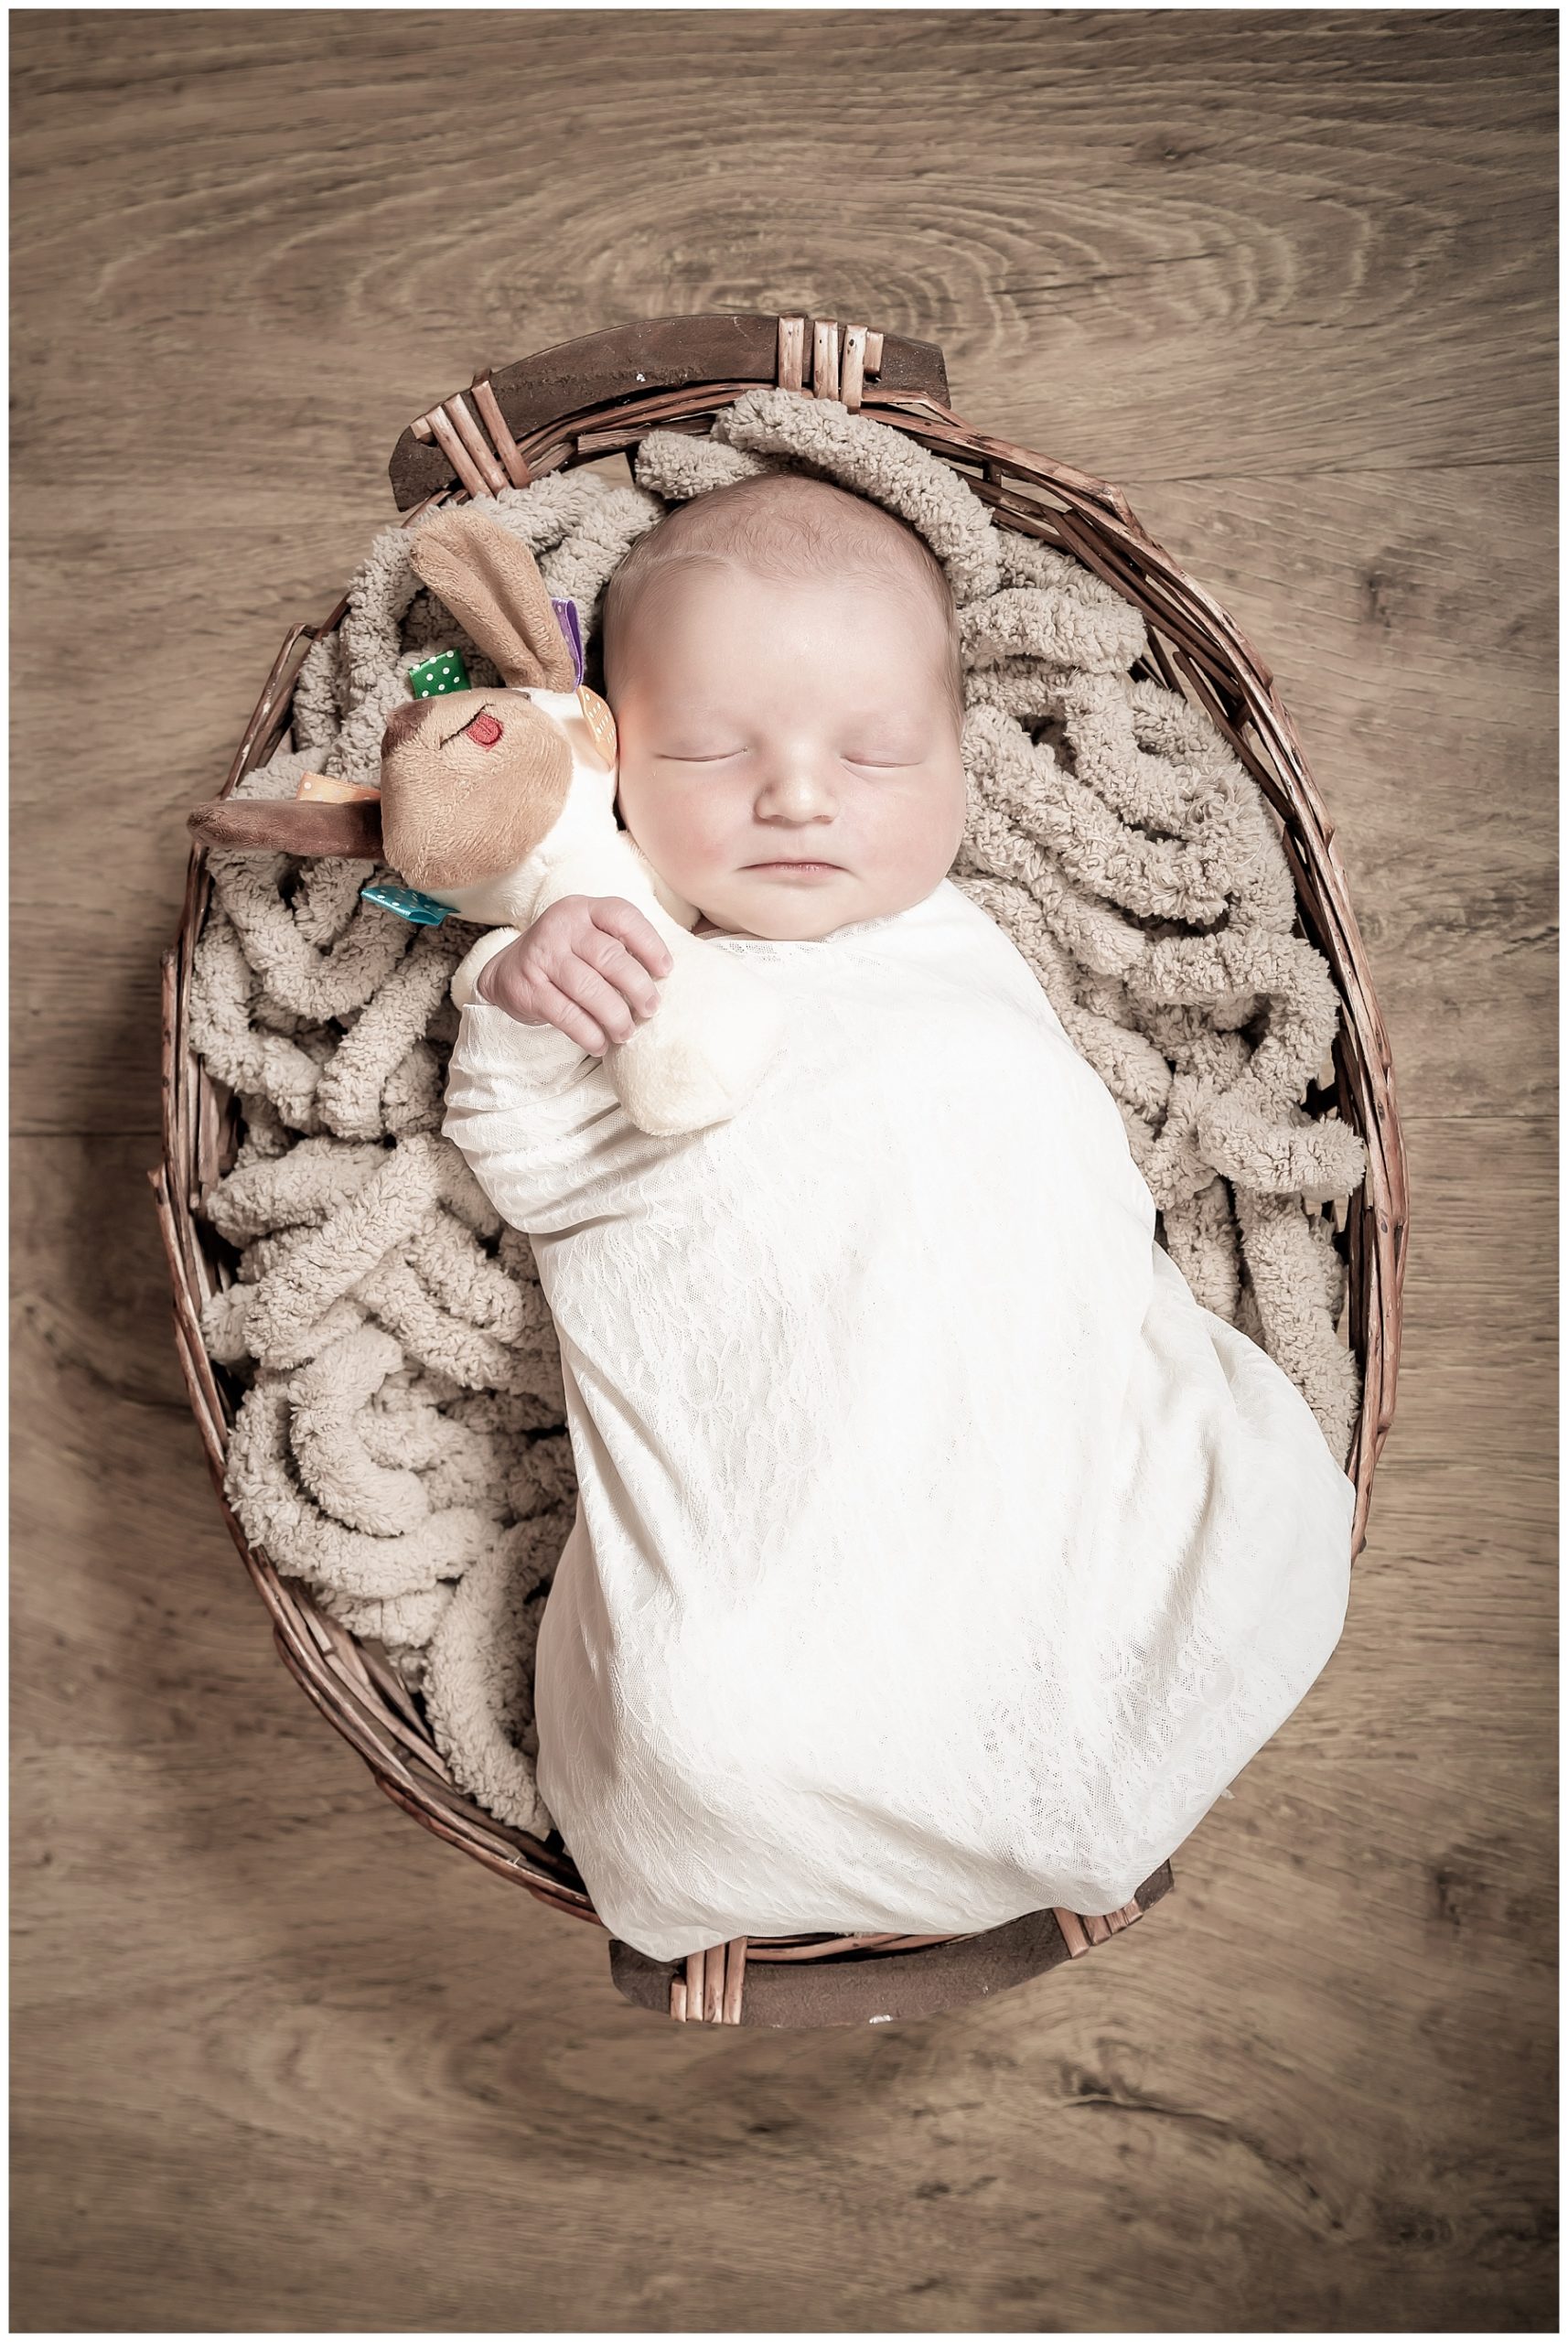 Rohan quick newborn shoot…only 2 days new